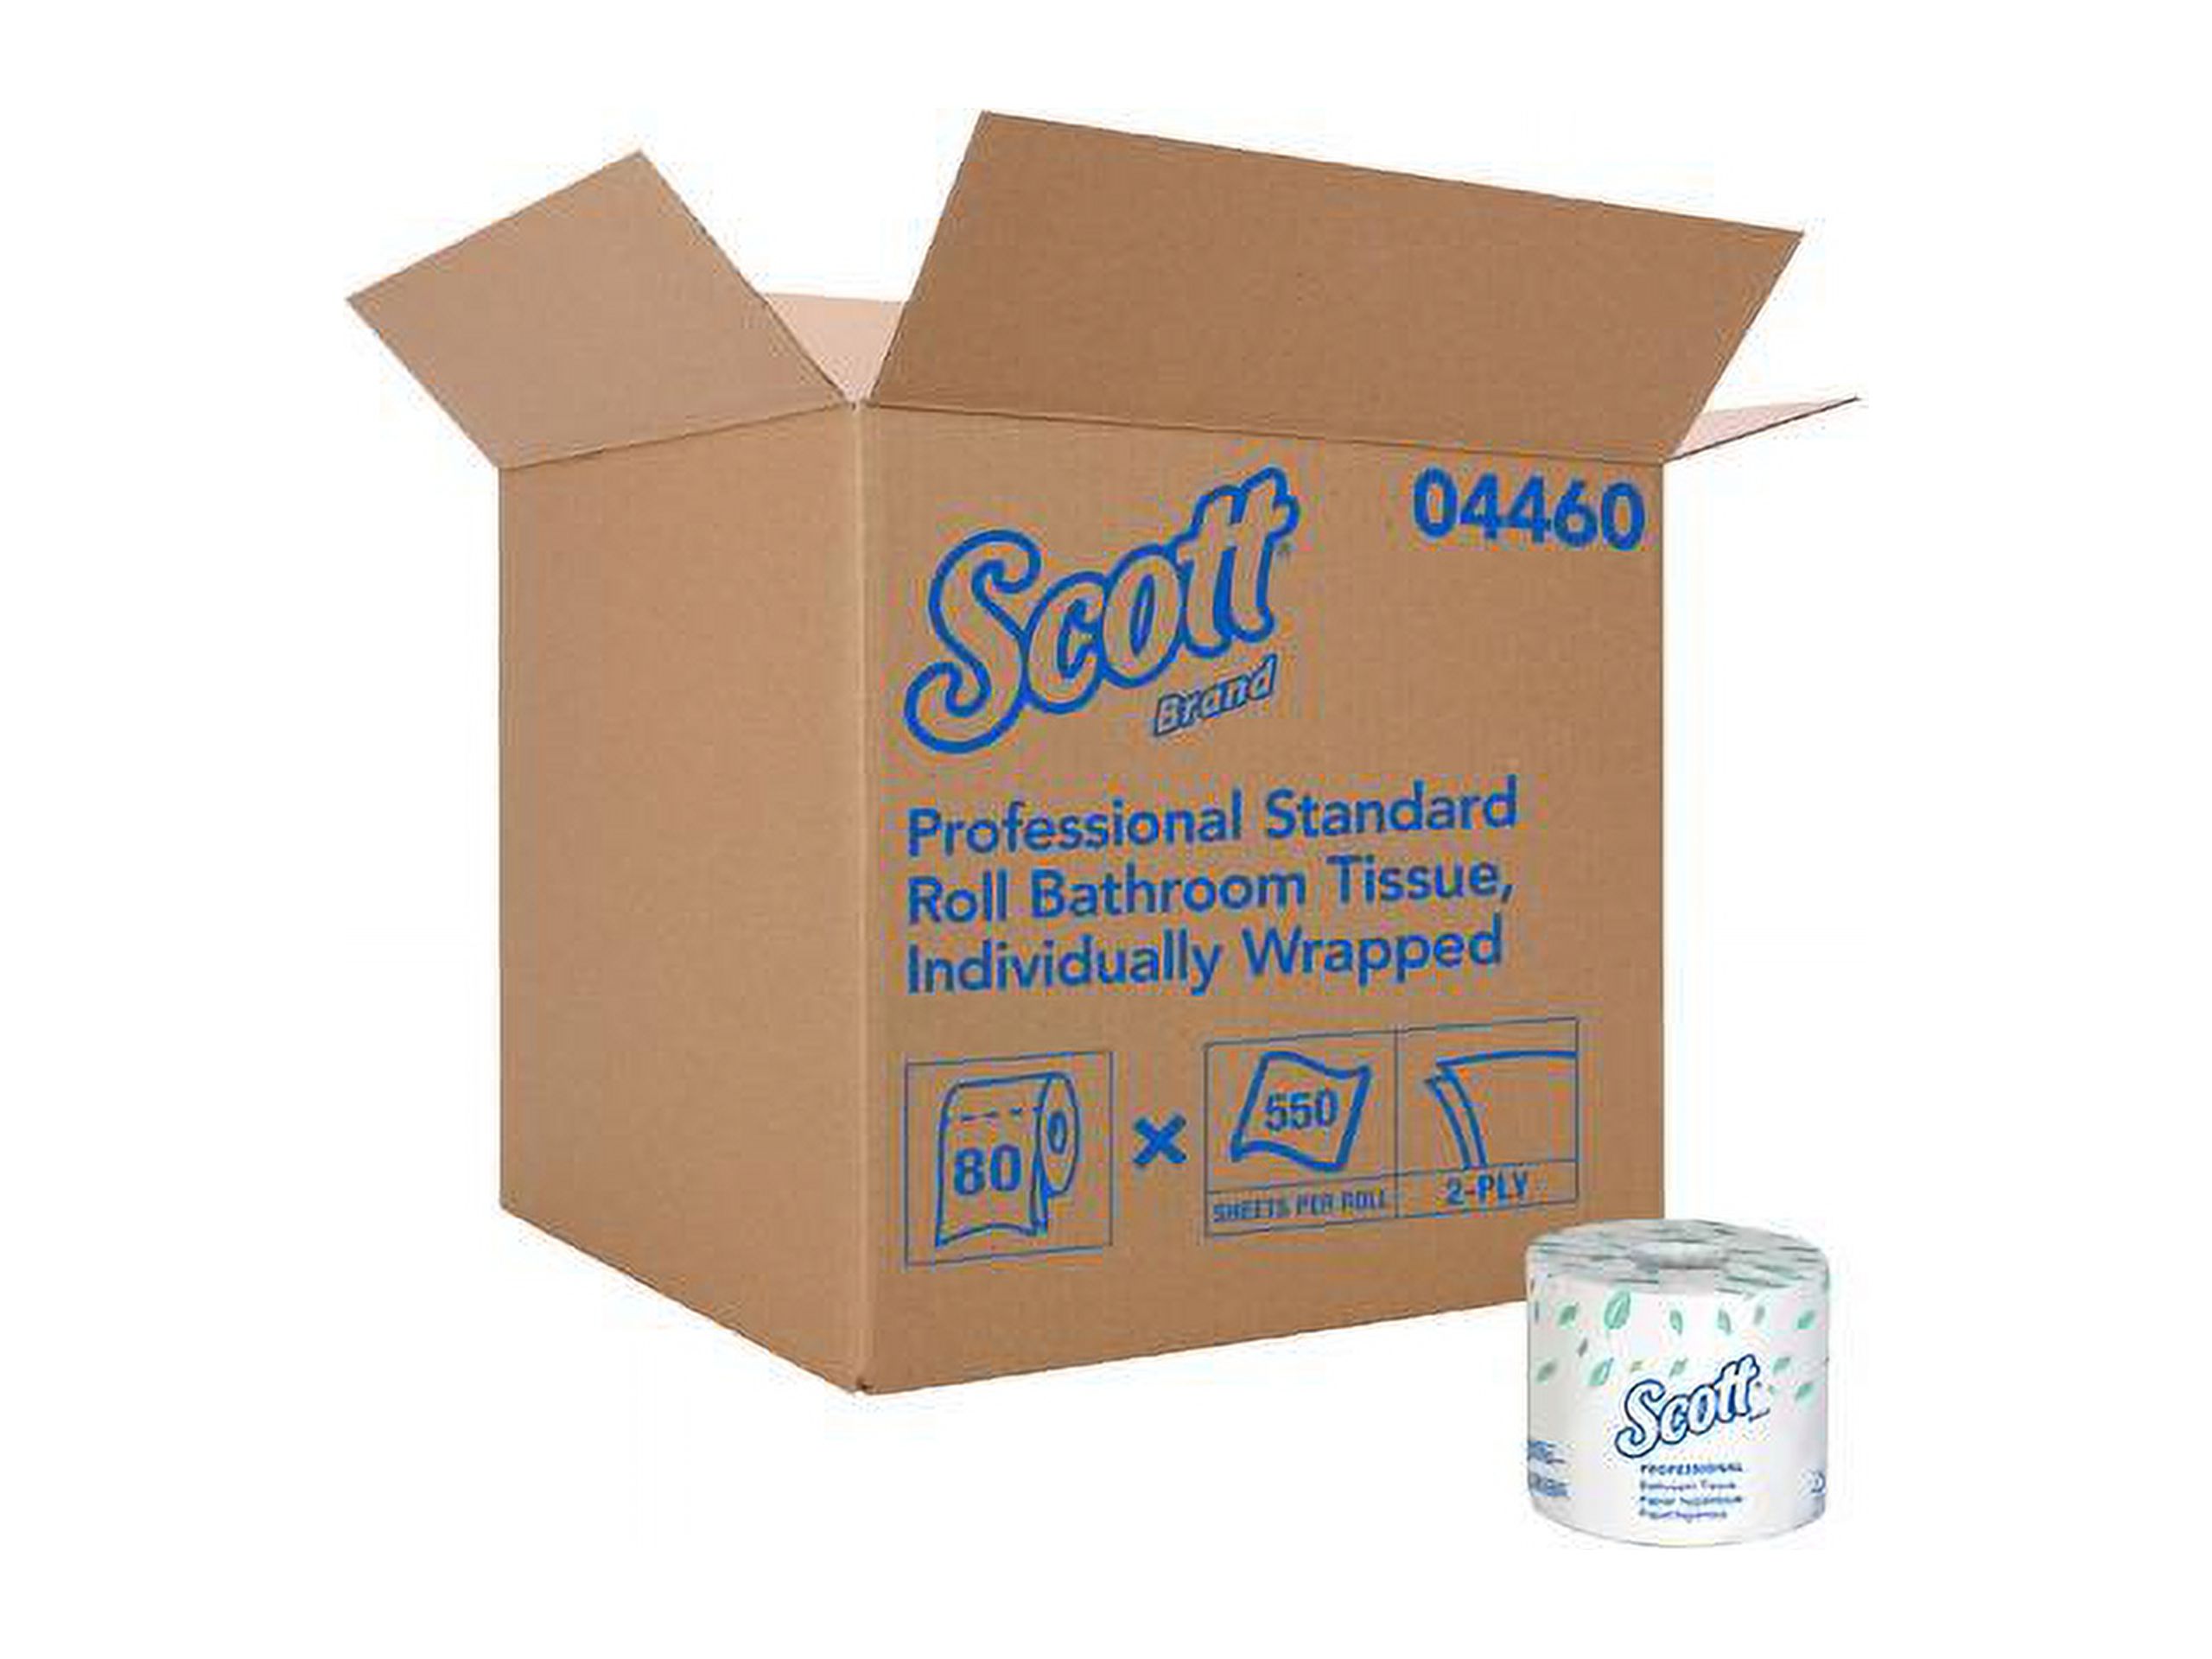 Scott Essential Standard Roll Bathroom Tissue - image 3 of 3